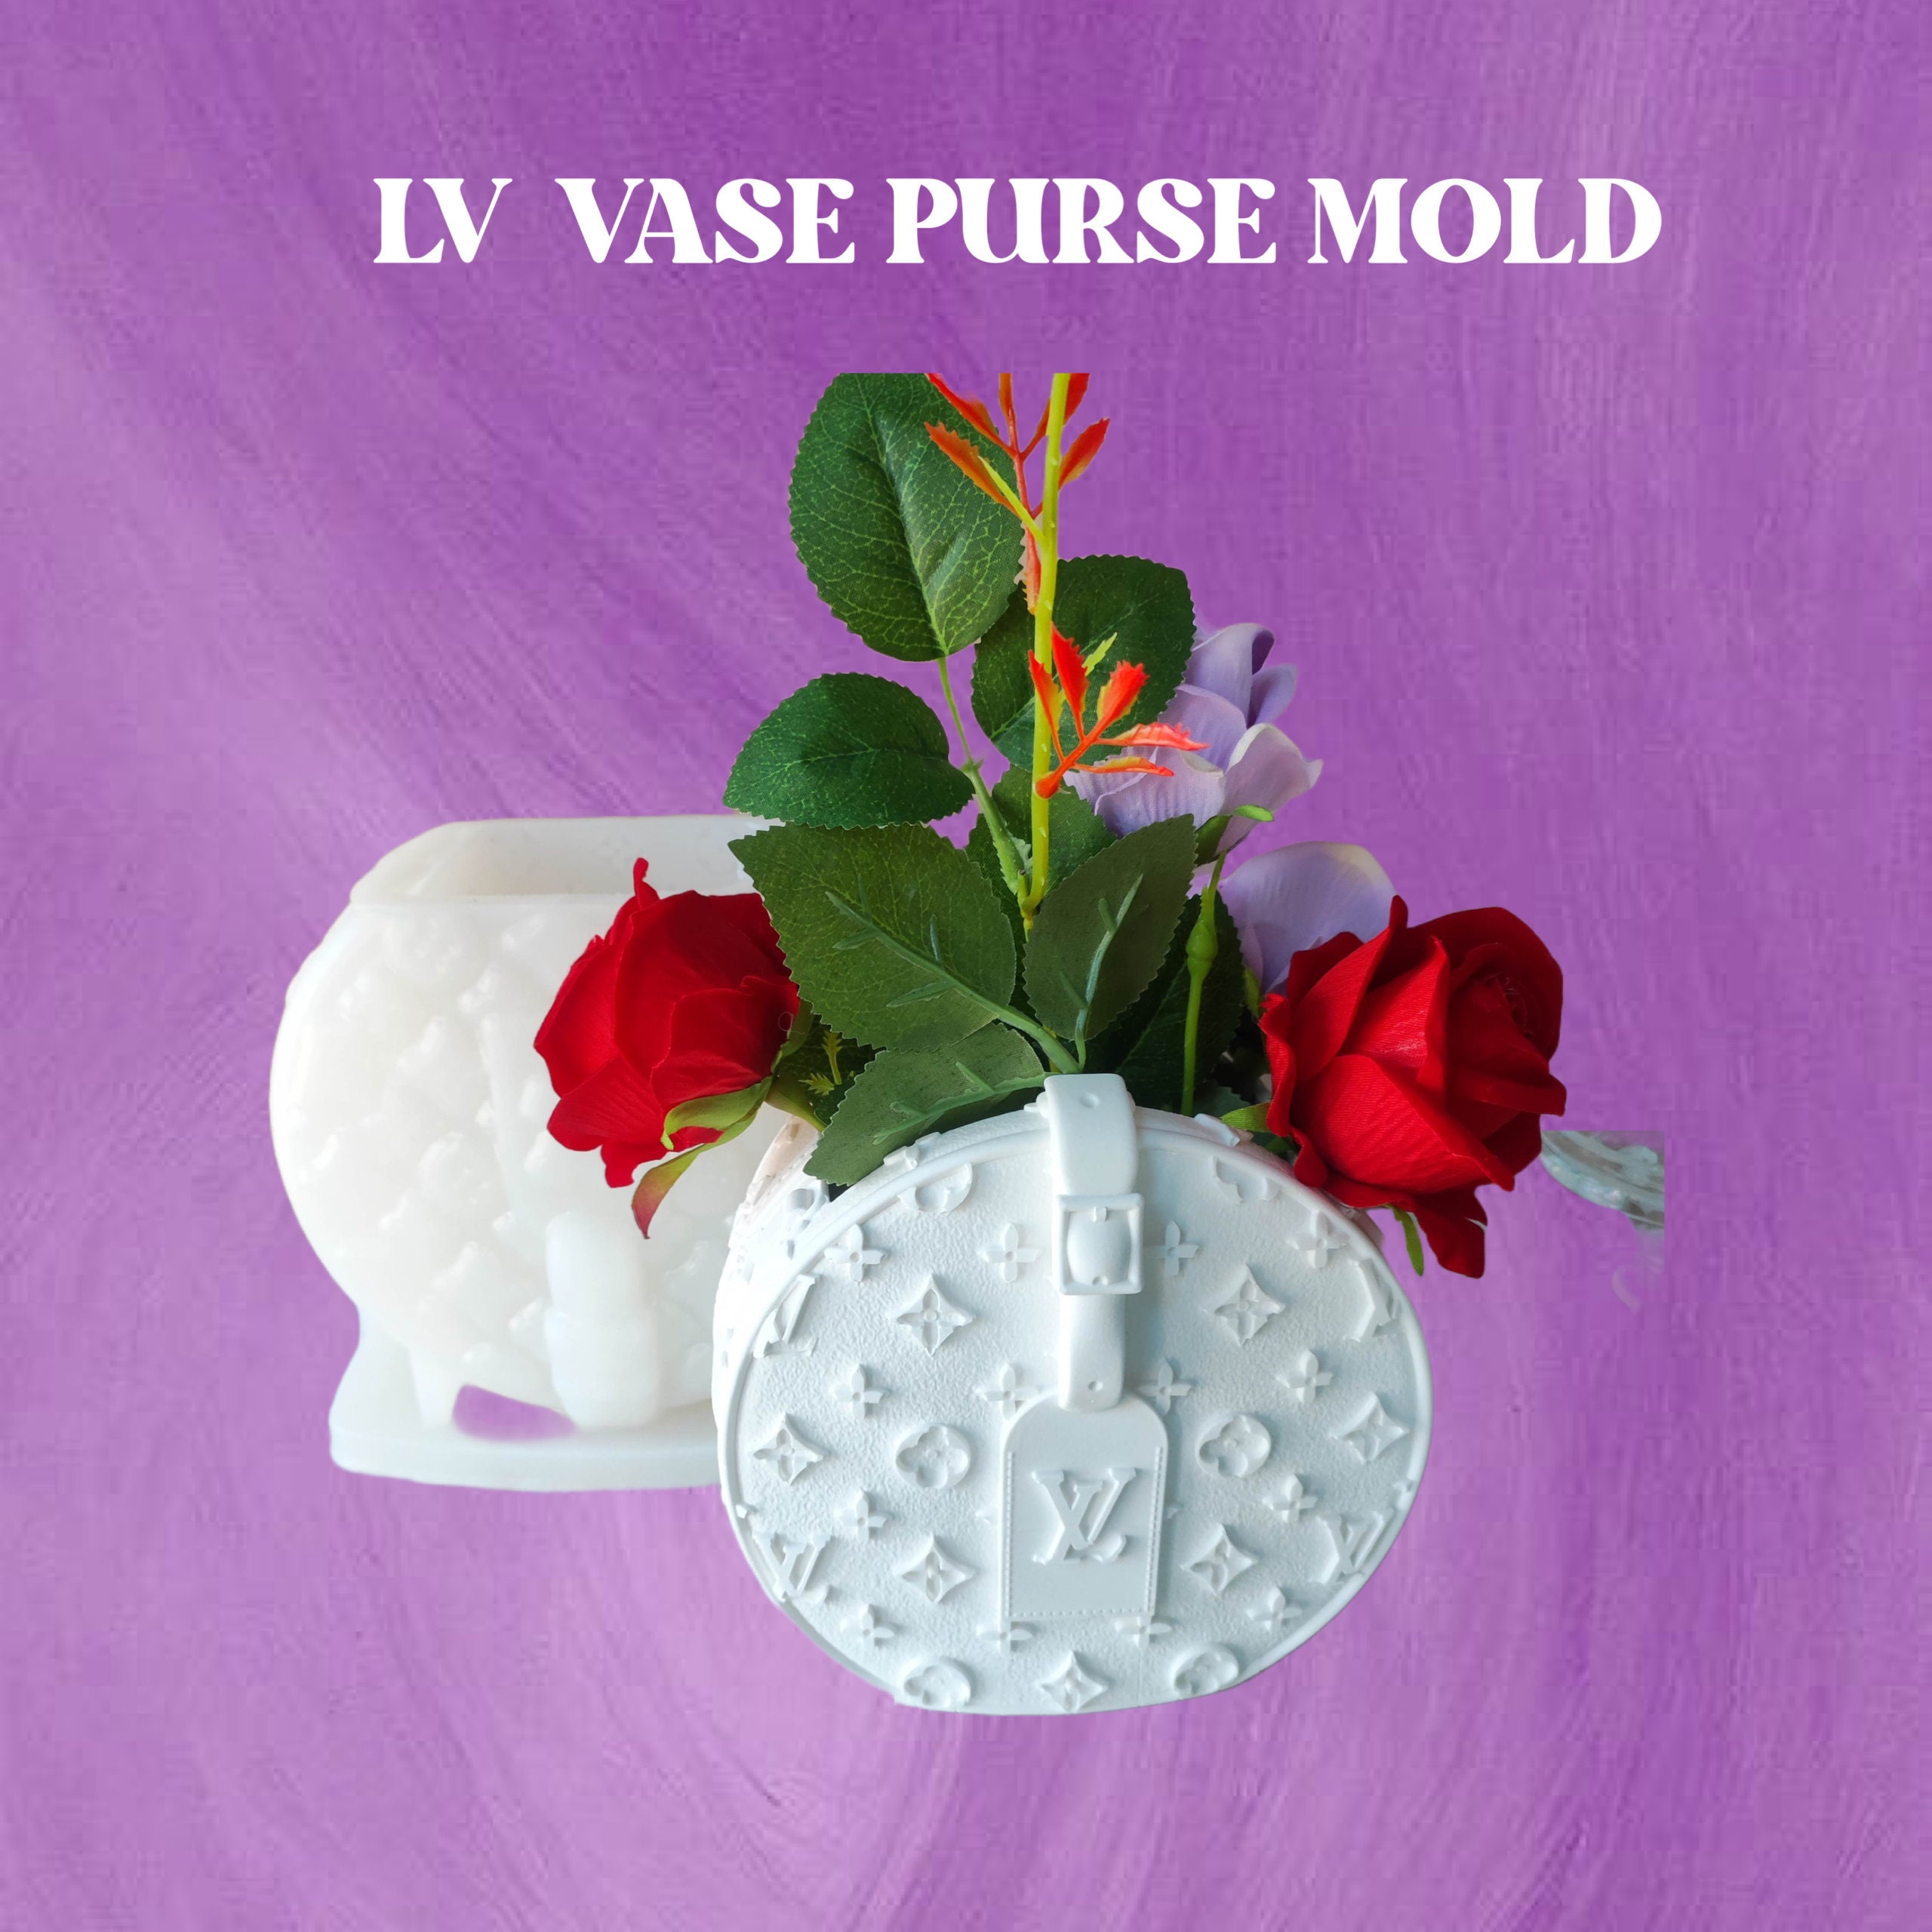 Louis Vuitton Flower Vase 